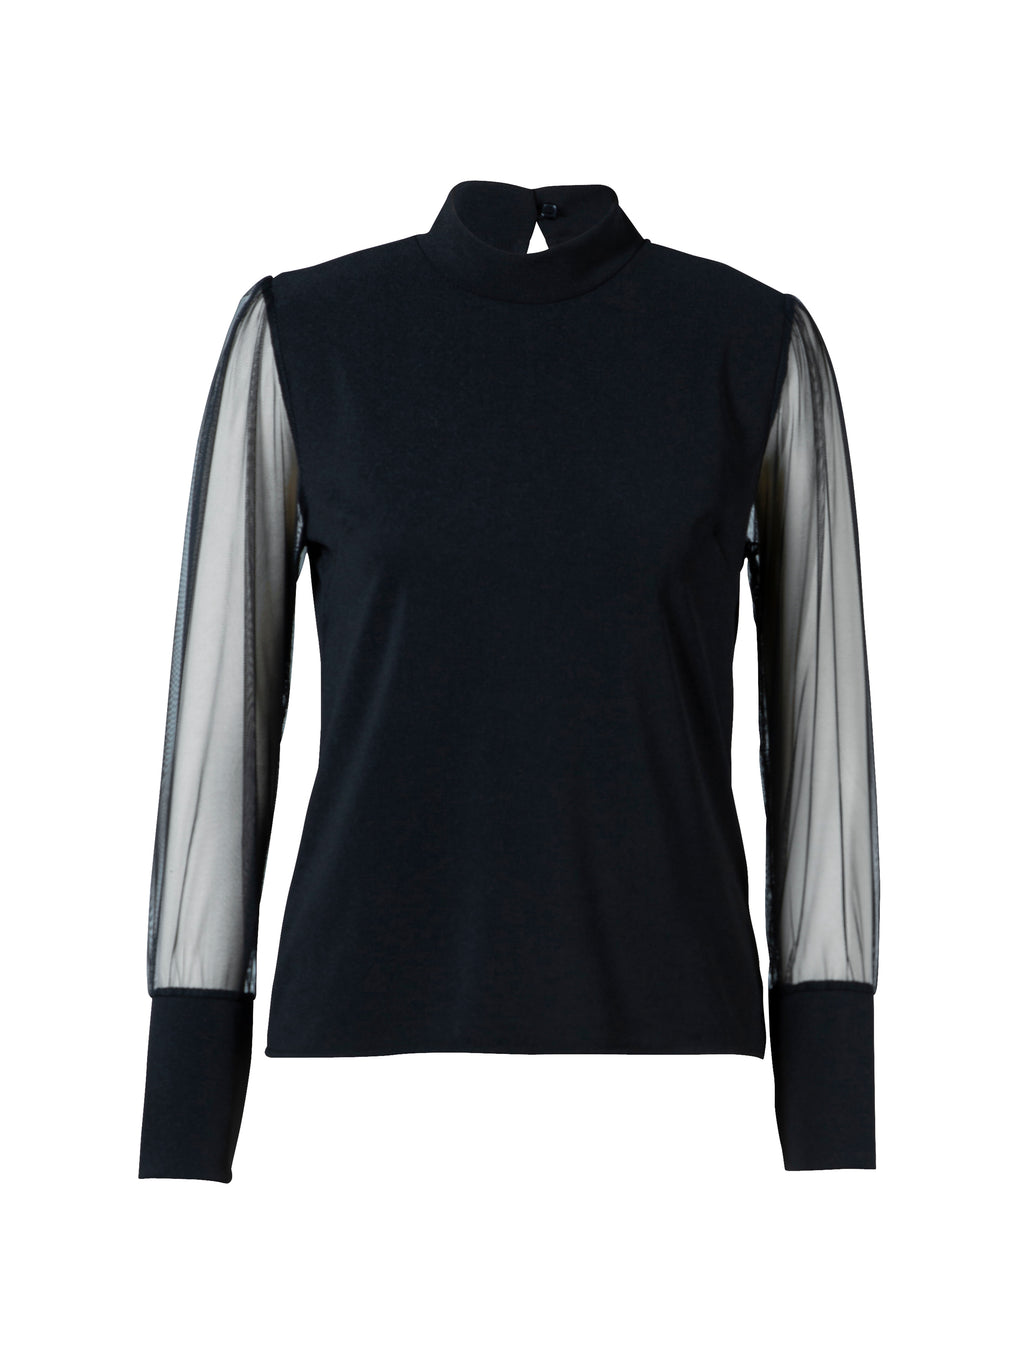 SAFINA blouse - Black – NÜ Denmark - INT.